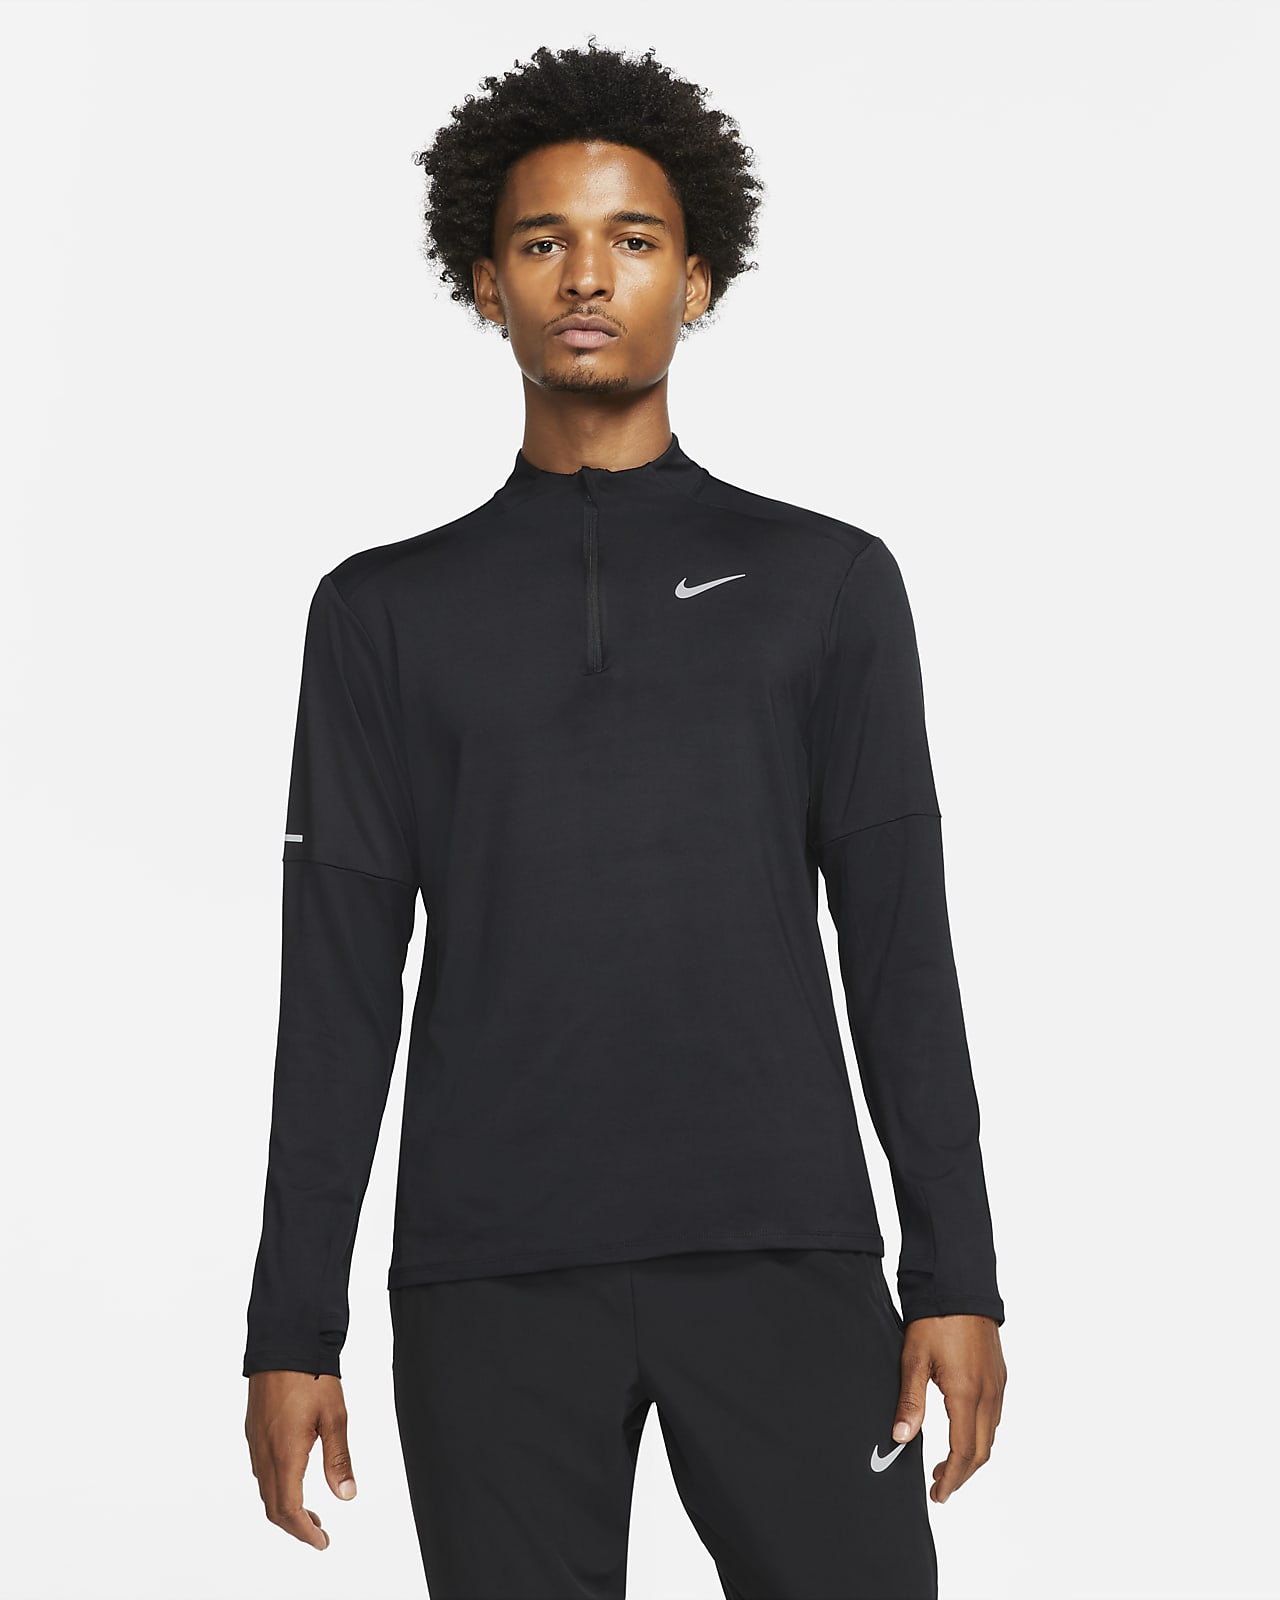 Nike Dri-FIT rövid cipzáras férfi futófelső